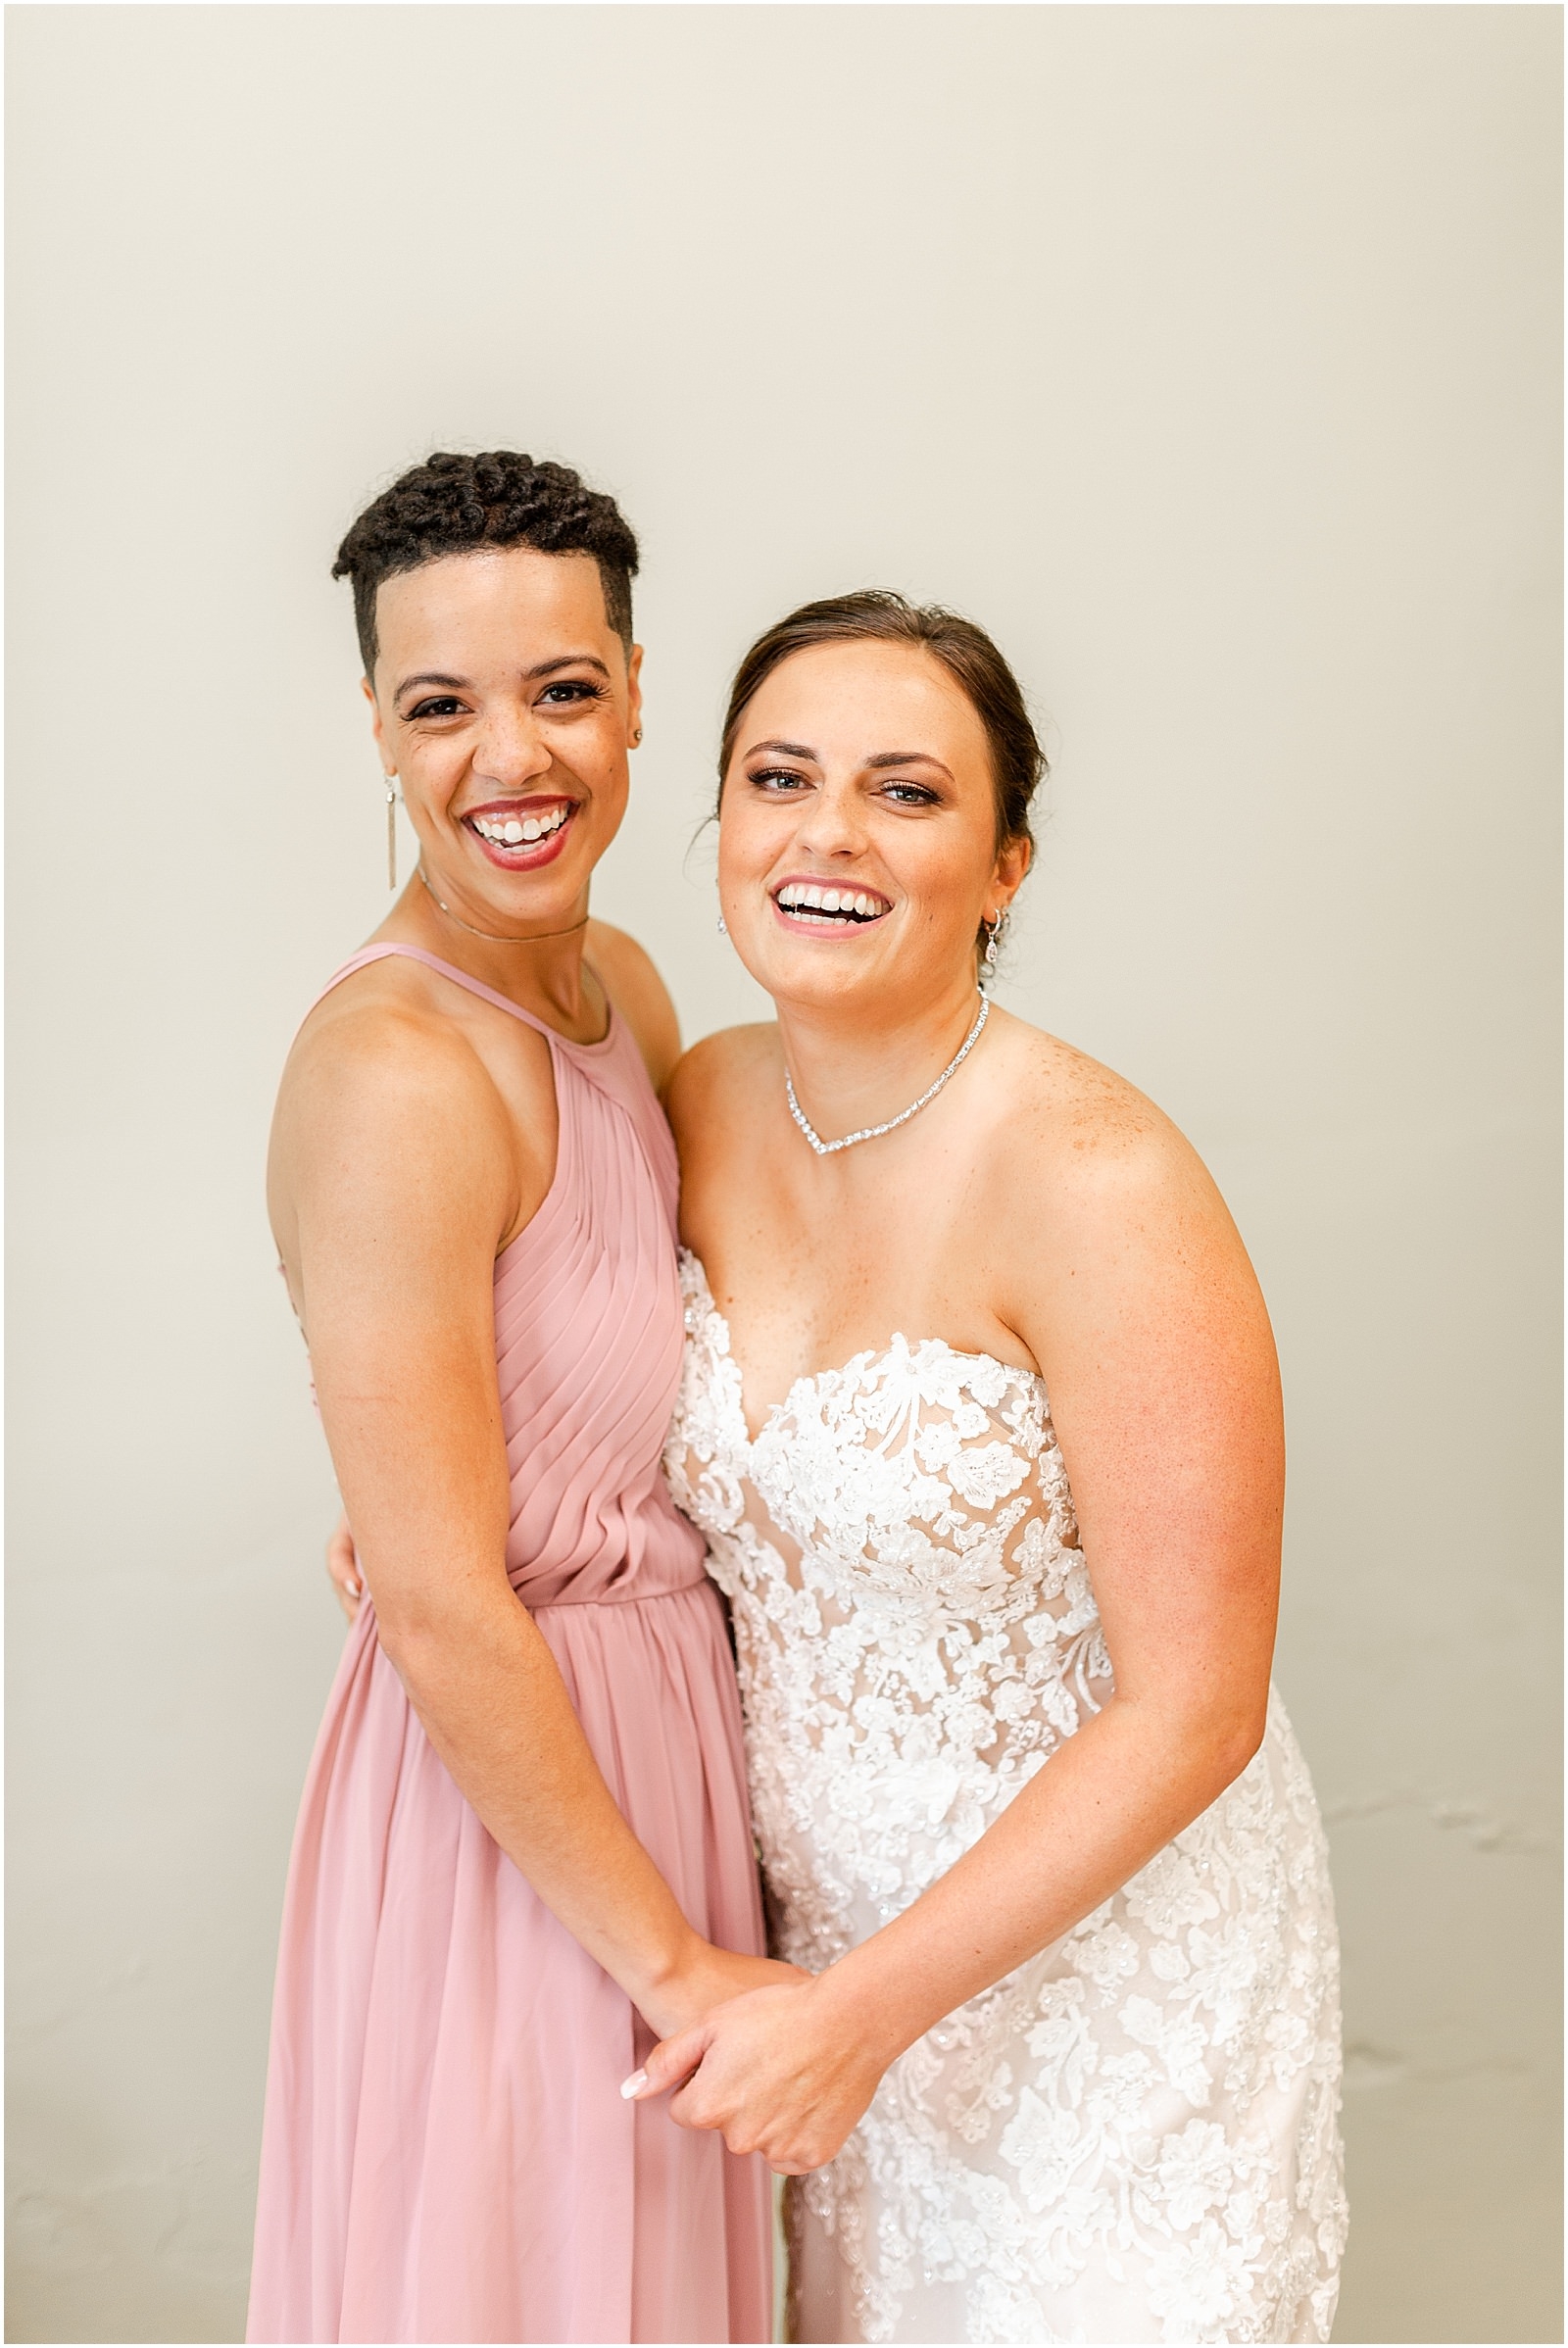 Deidra and Andrew | A Huntingburgh Indiana Wedding Bret and Brandie | Evansville Photographers | @bretandbrandie-0015.jpg